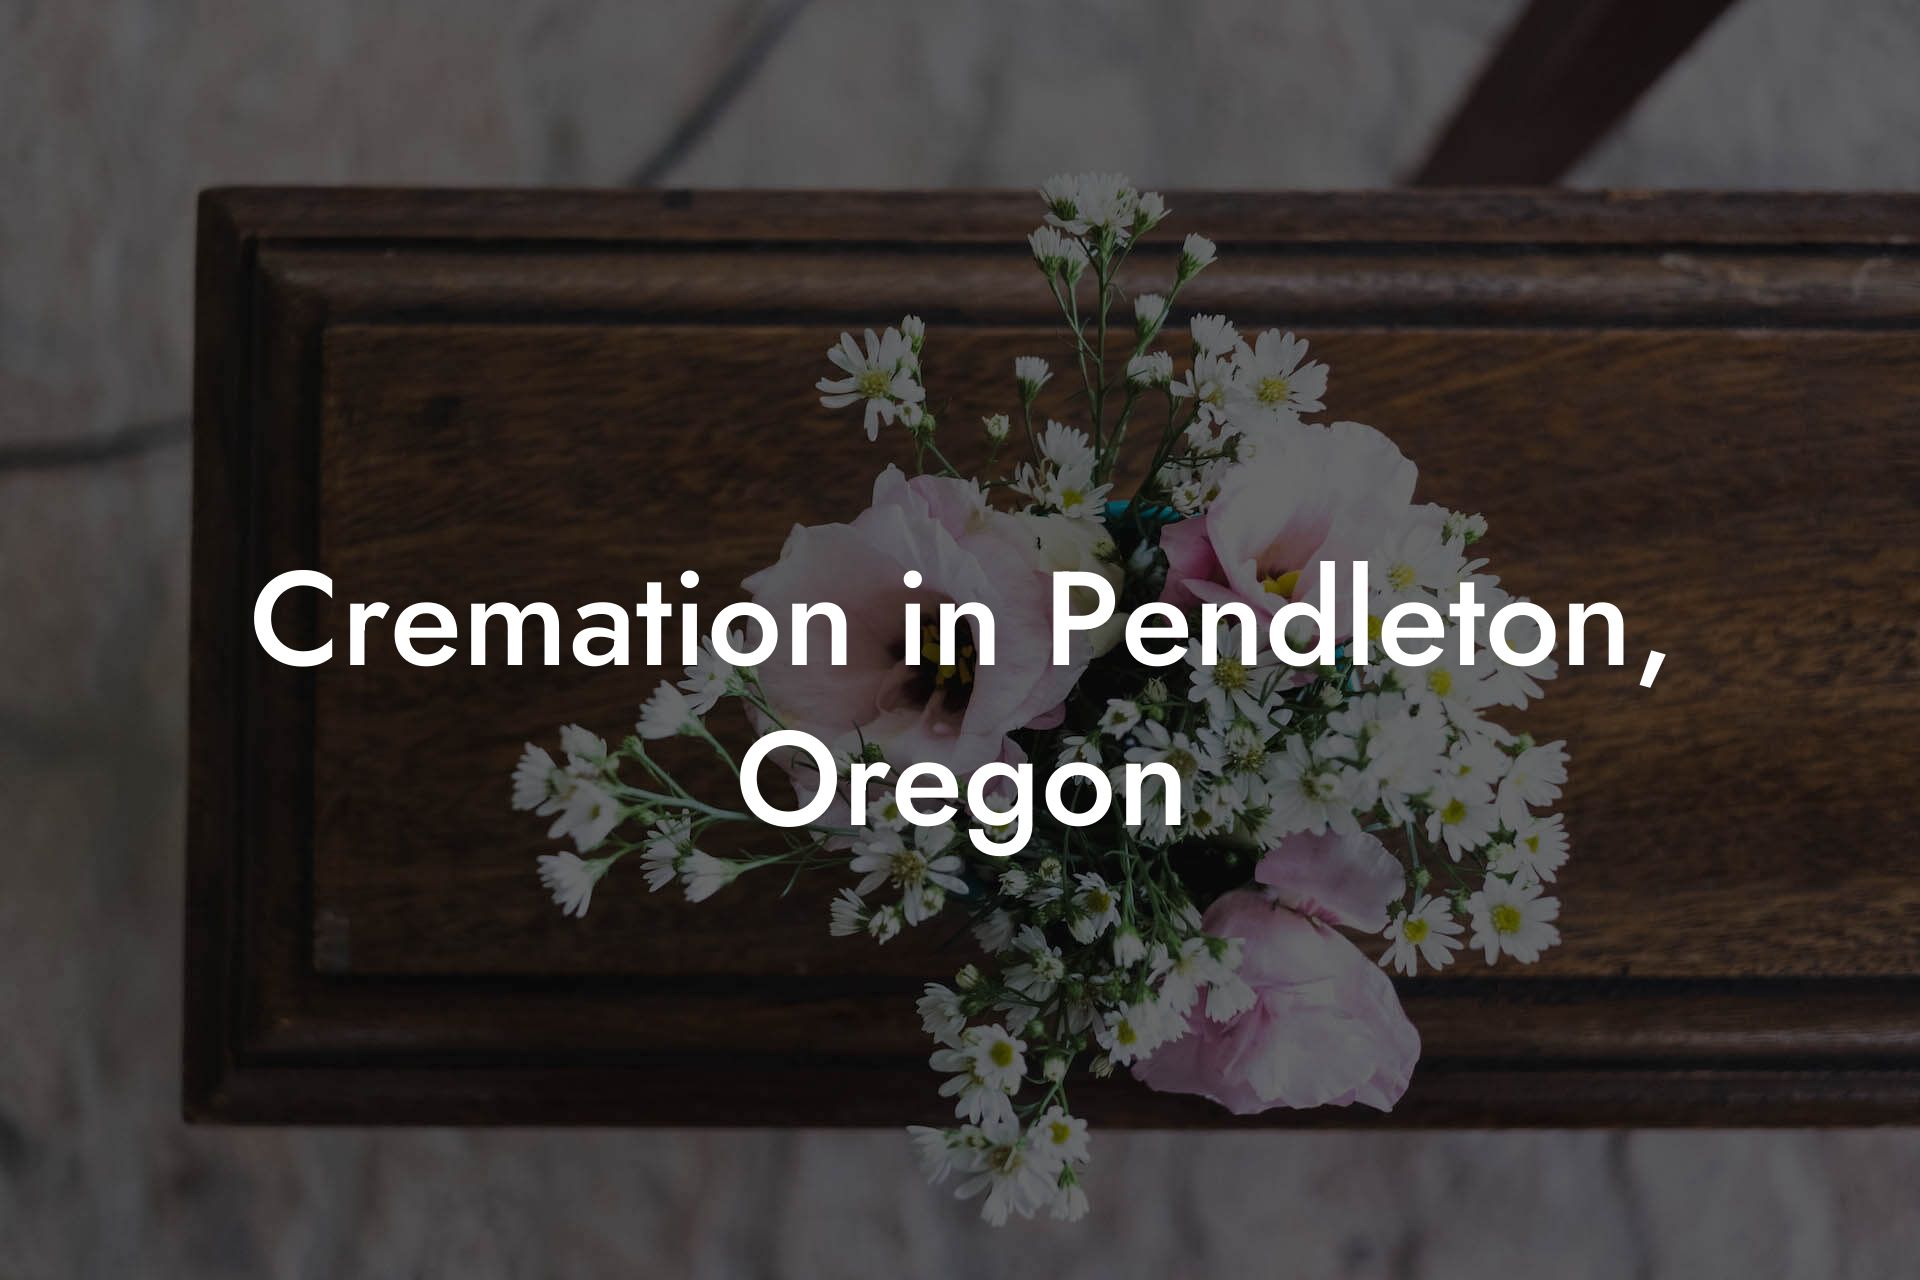 Cremation in Pendleton, Oregon